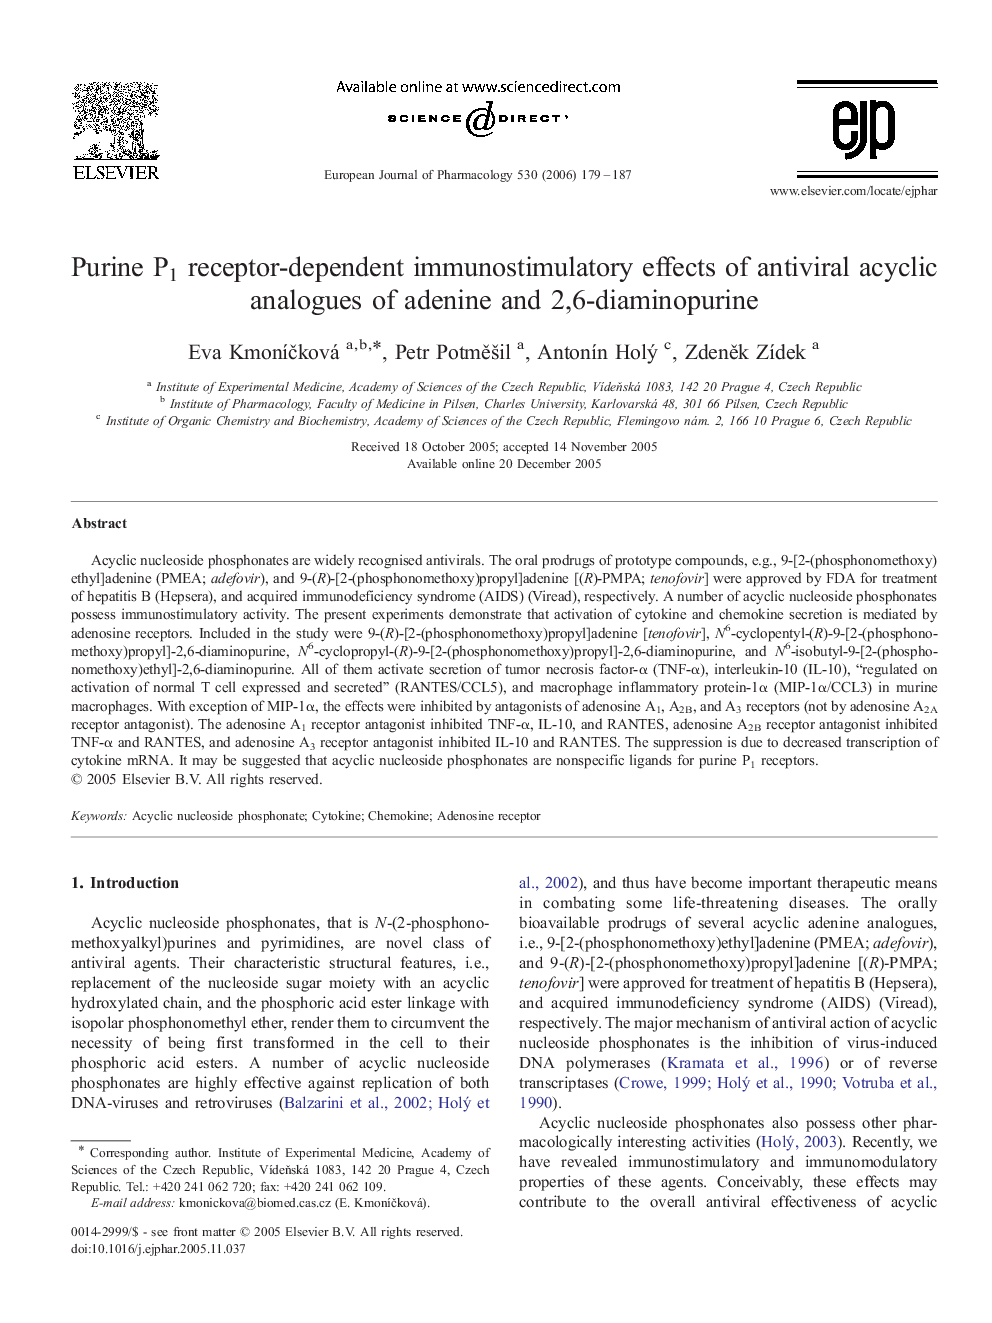 Purine P1 receptor-dependent immunostimulatory effects of antiviral acyclic analogues of adenine and 2,6-diaminopurine